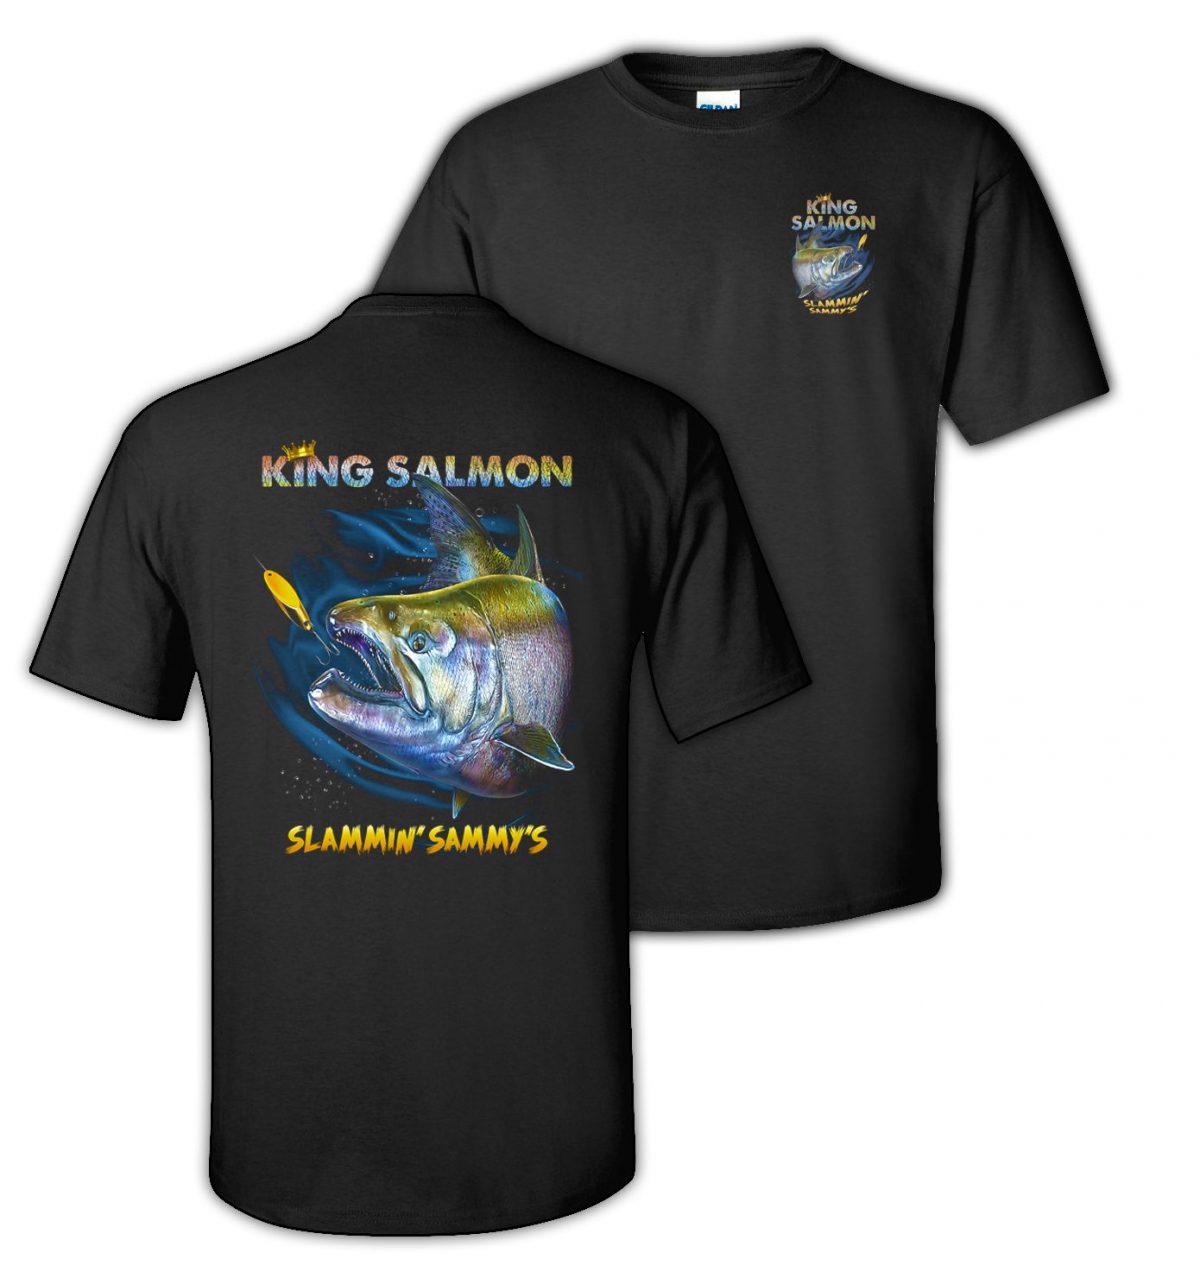 King Salmon “Slammin’ Sammy’s” Two- Sided Short Sleeve T-Shirt